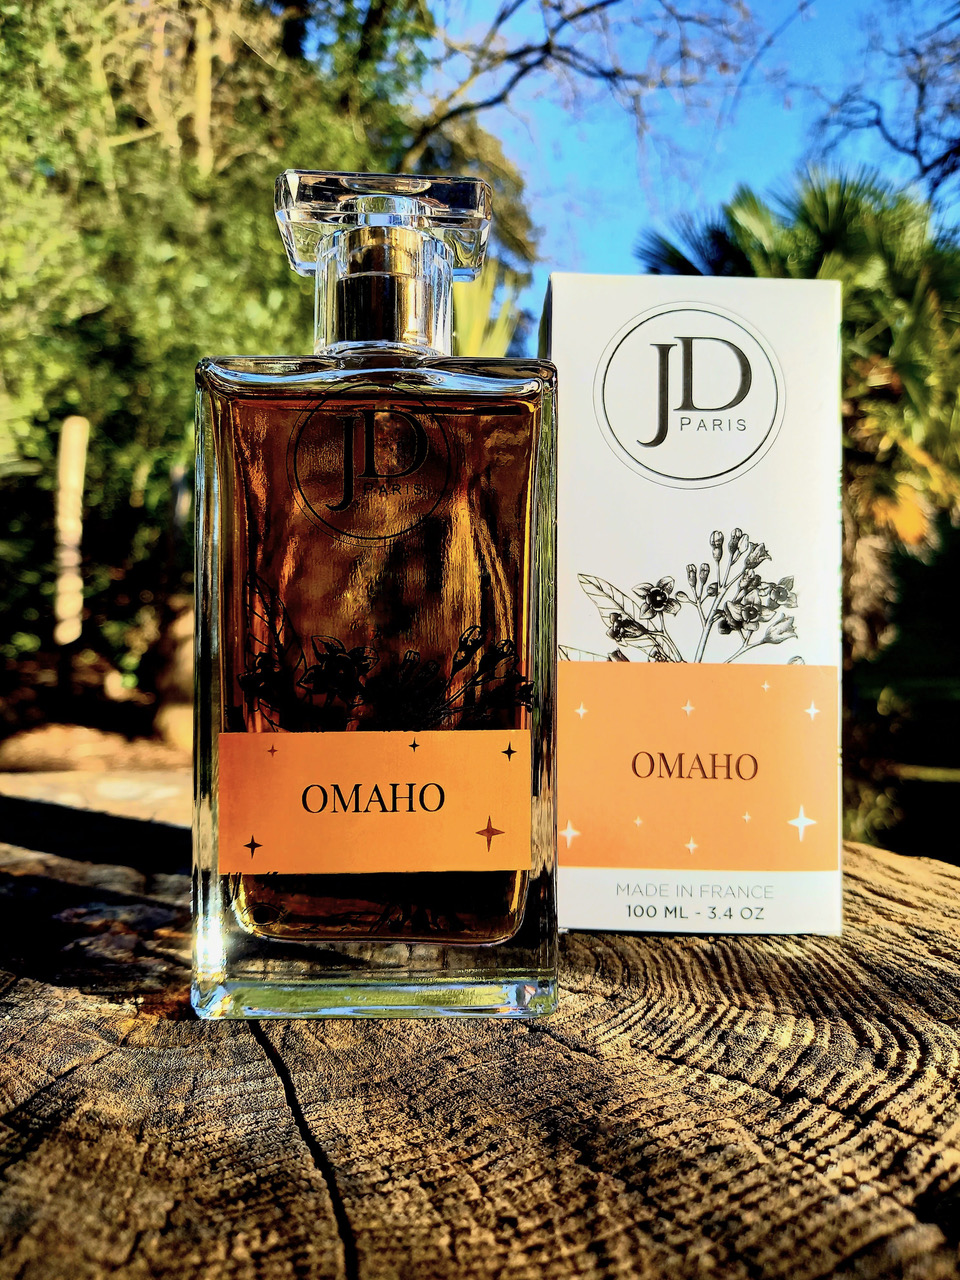 Omaho by JD Paris - 100 ml